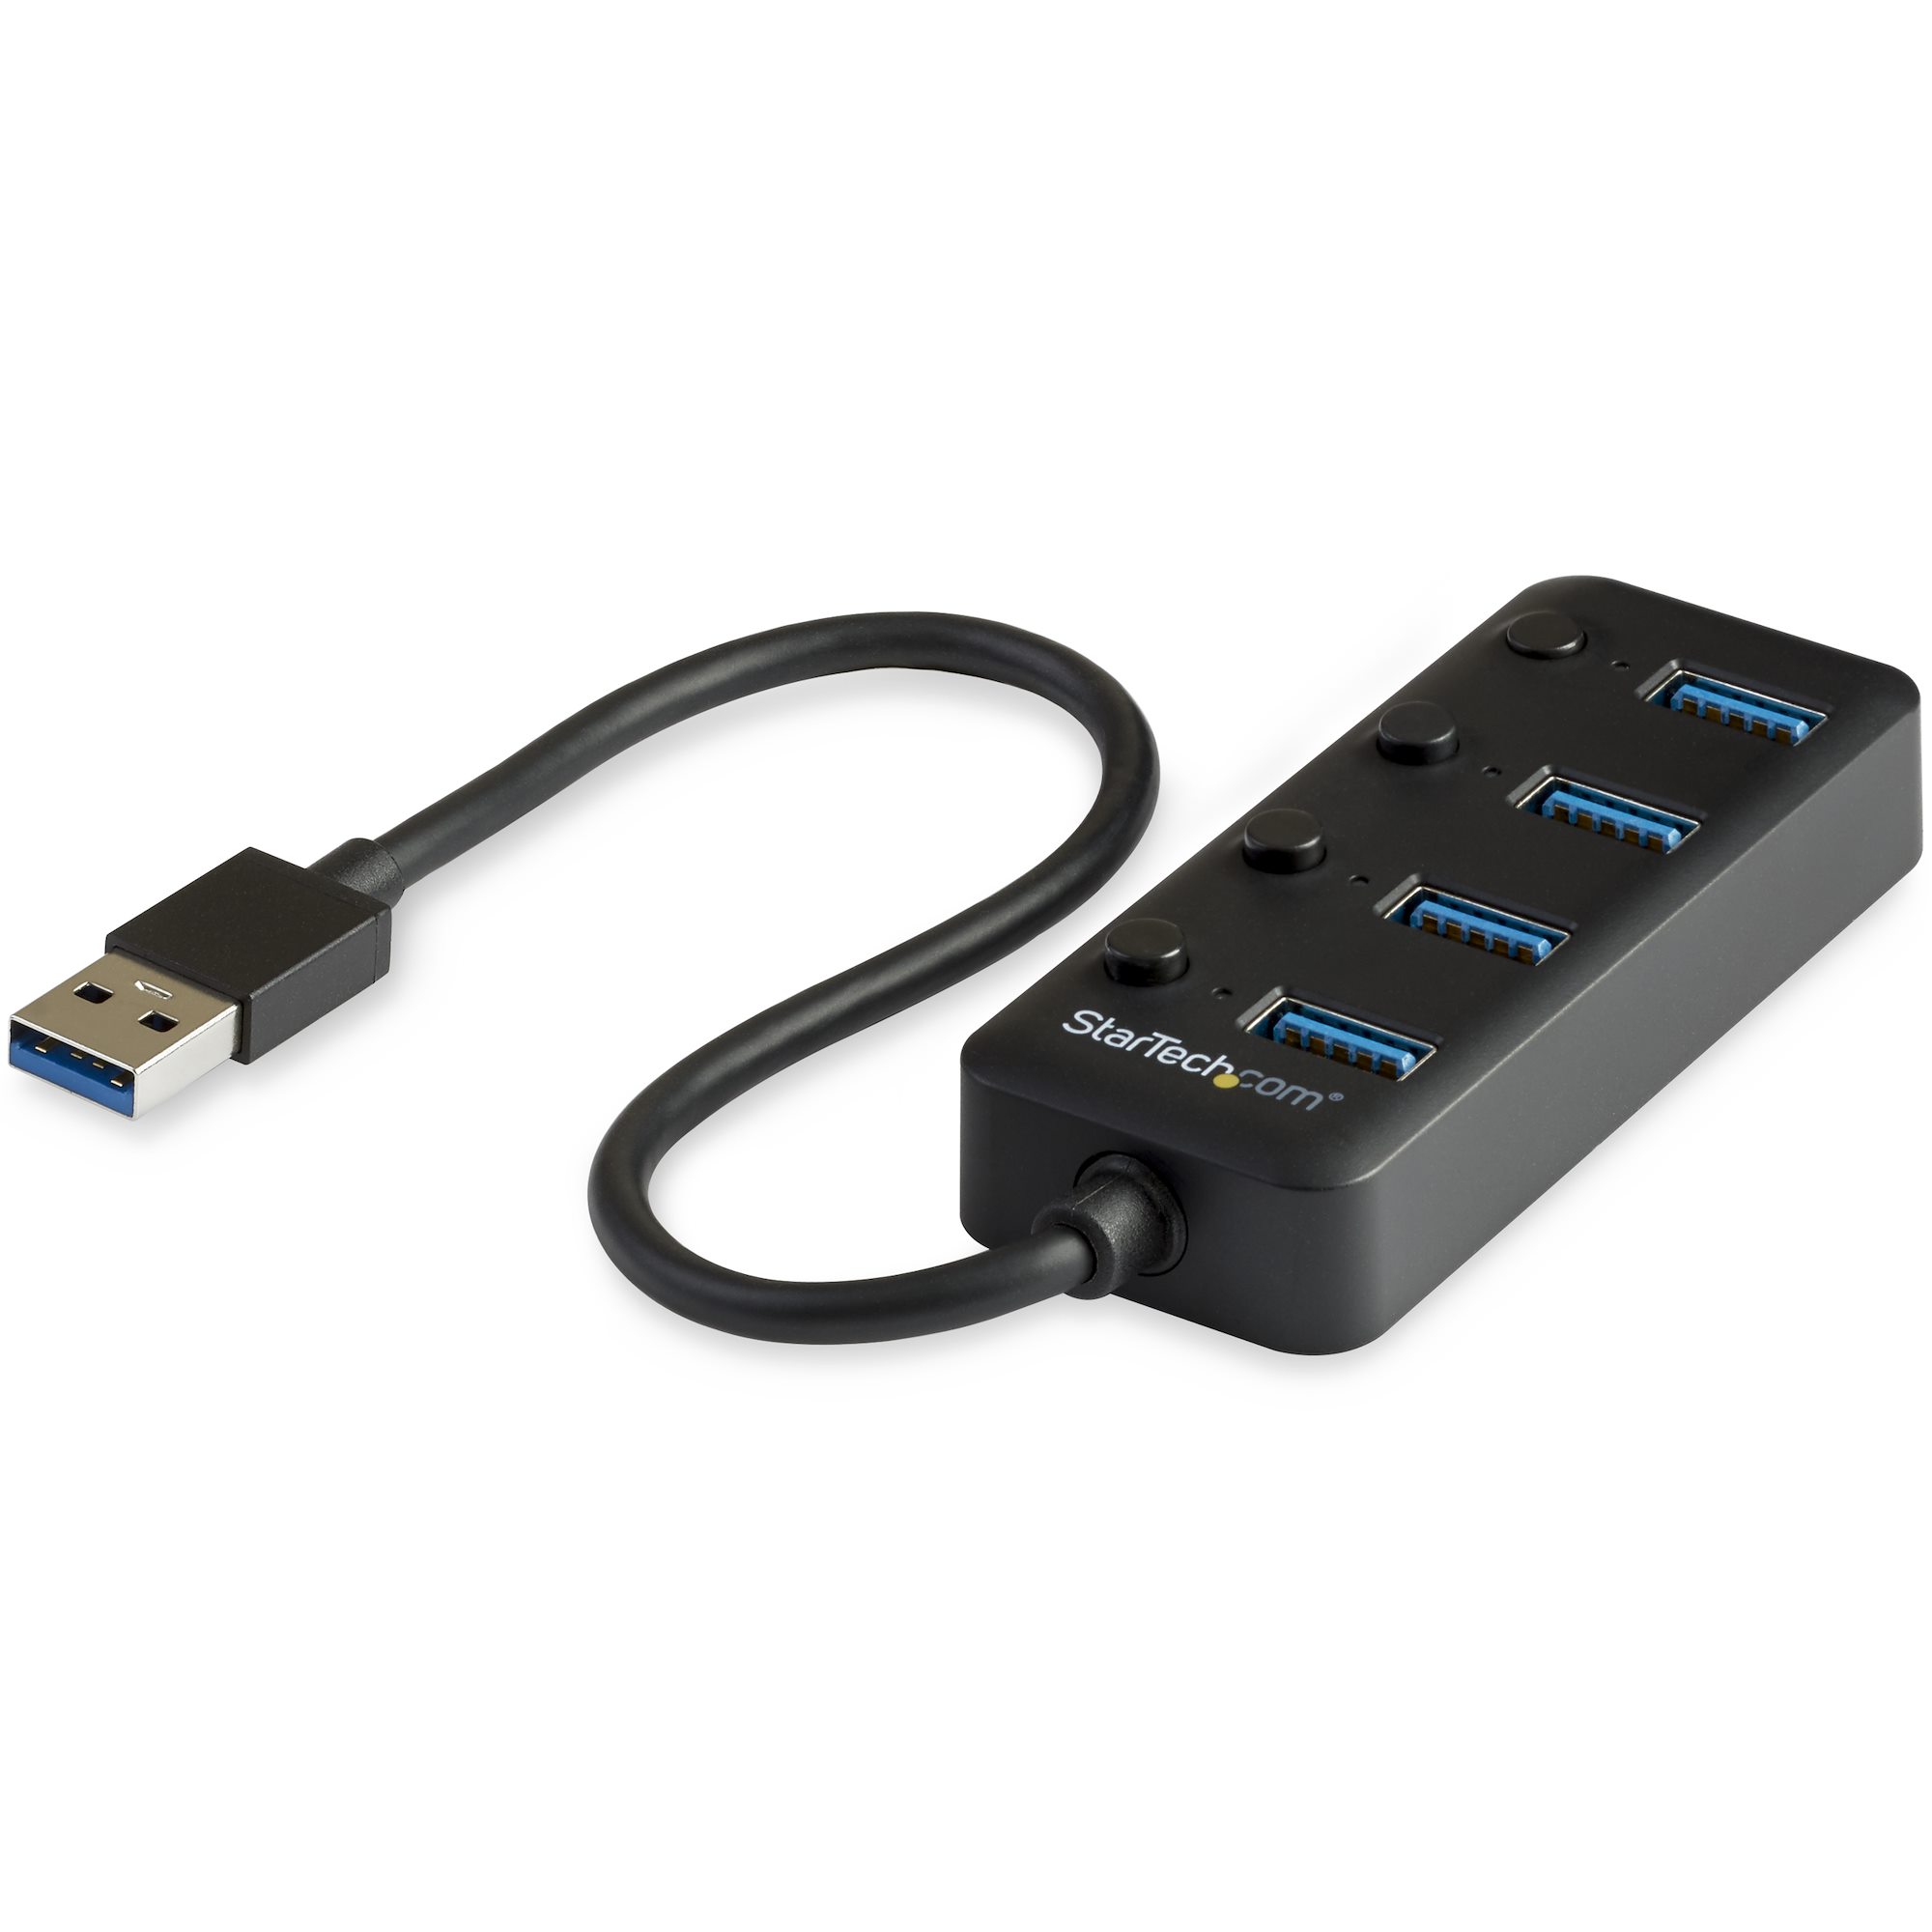 USB HUB USB 3.0 HUB 4 Port Adapter Active Distributor For Windows Laptop PC